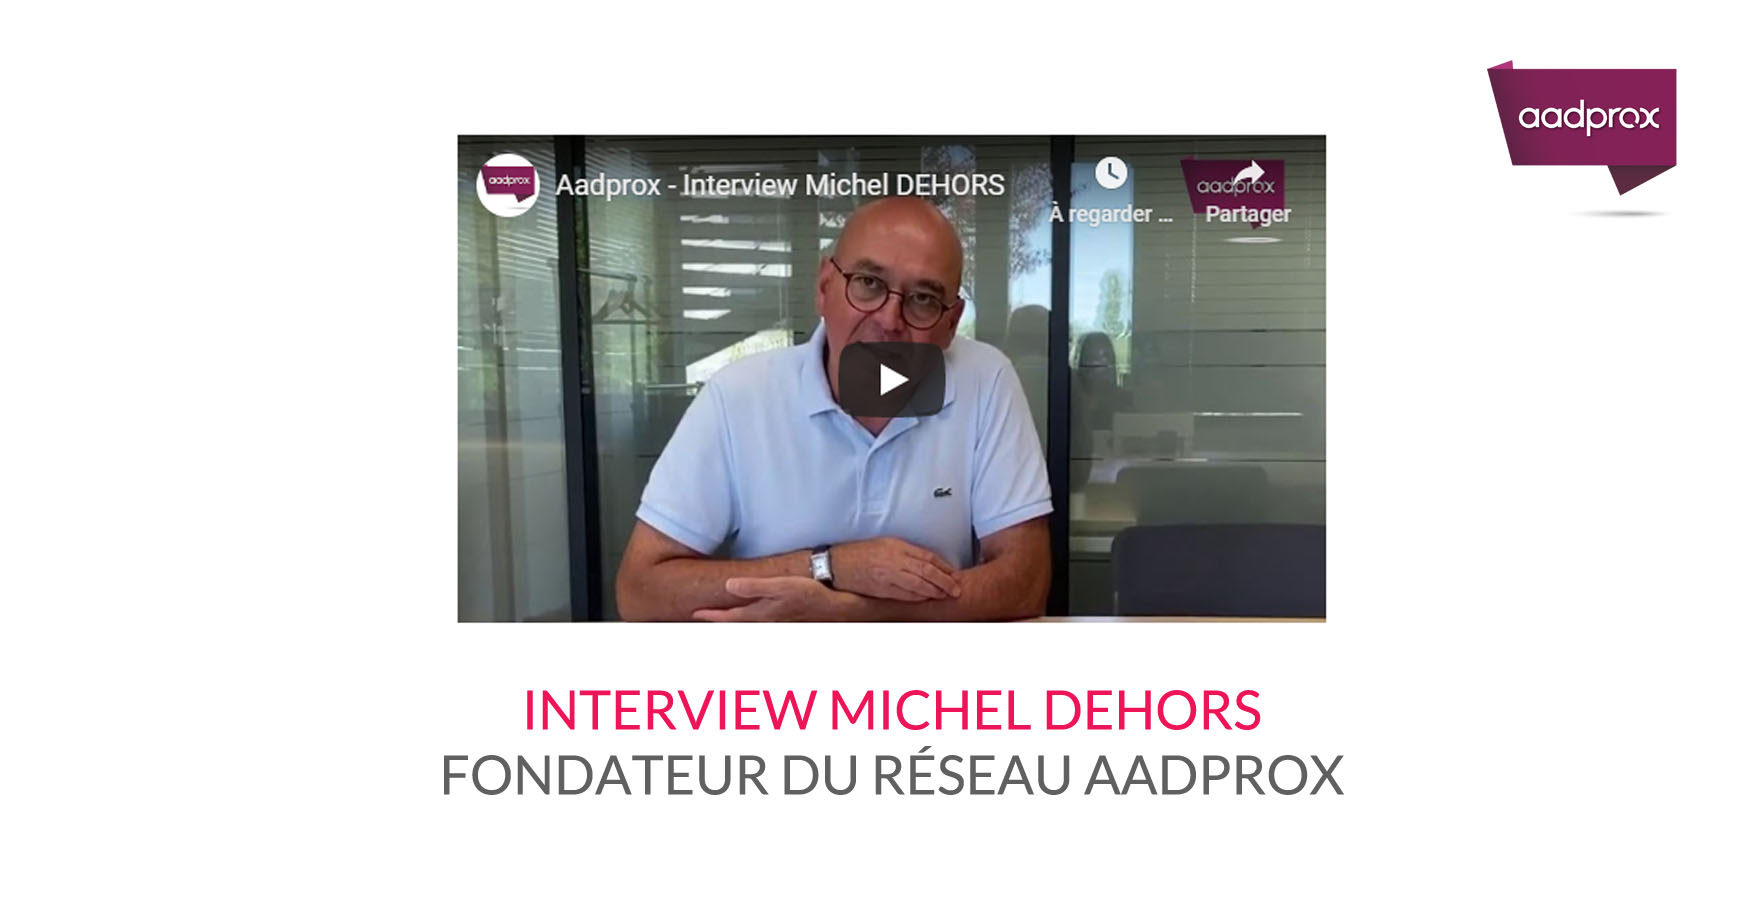 You are currently viewing Interview Michel DEHORS, fondateur du réseau Aadprox